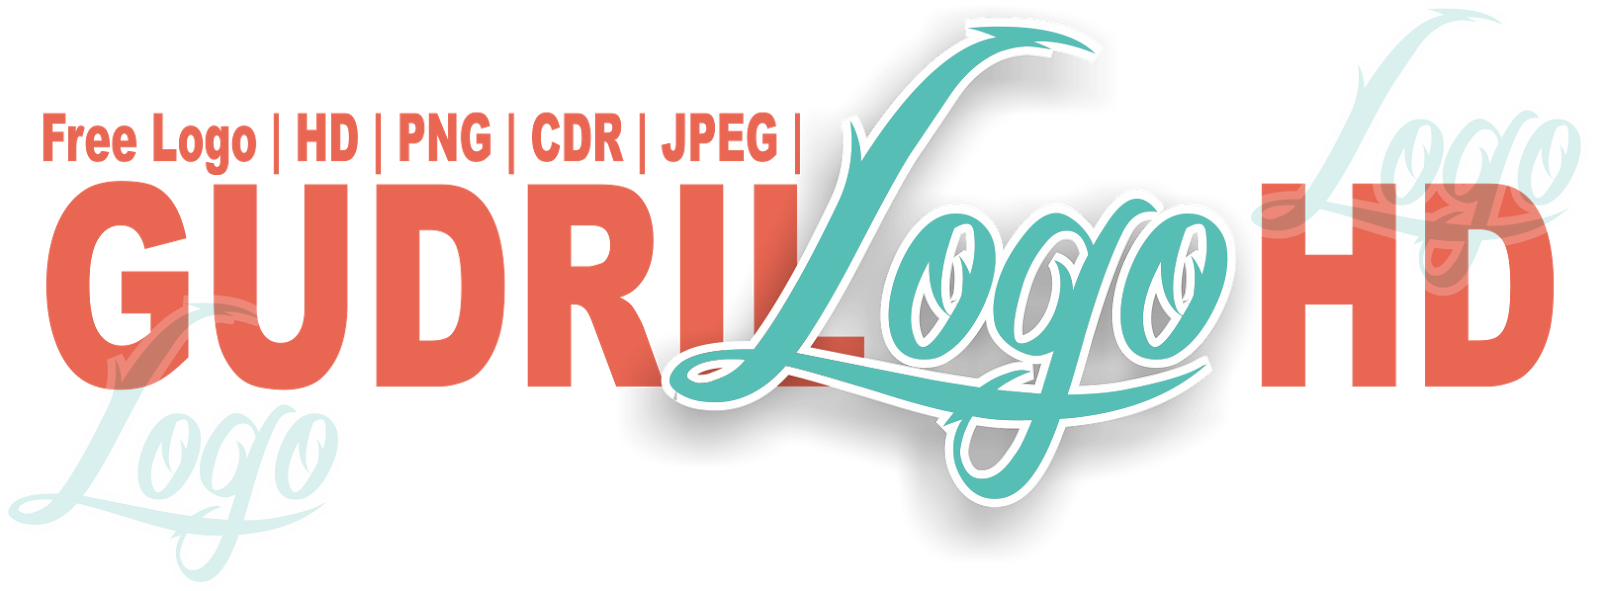 download logo puskesmas cdr png gudril logo tempat #33005